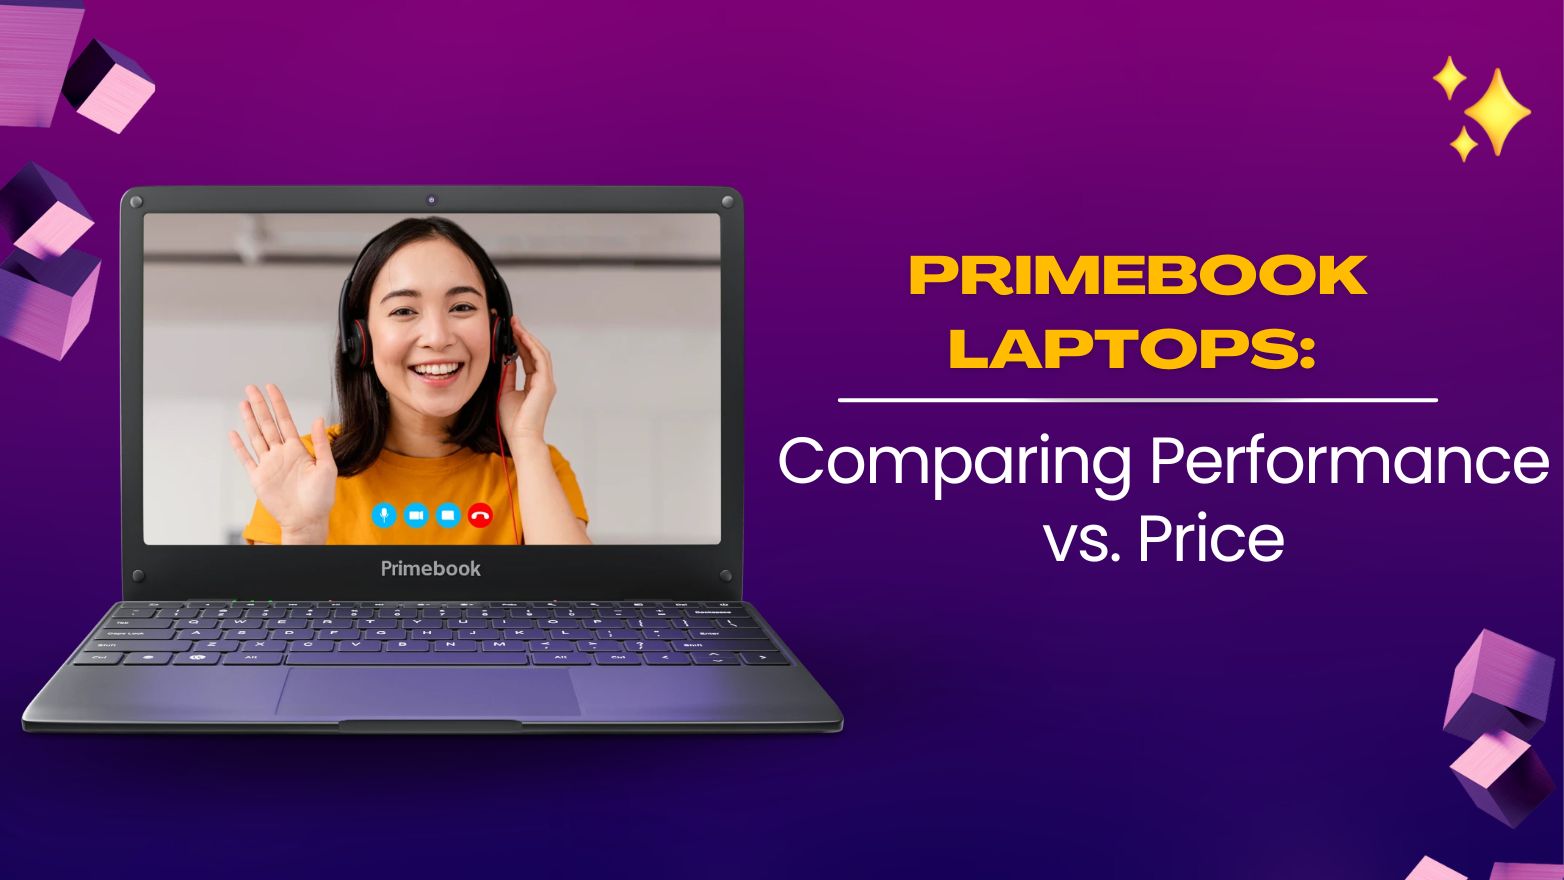 Comparing Primebook Laptops Performance vs. Price